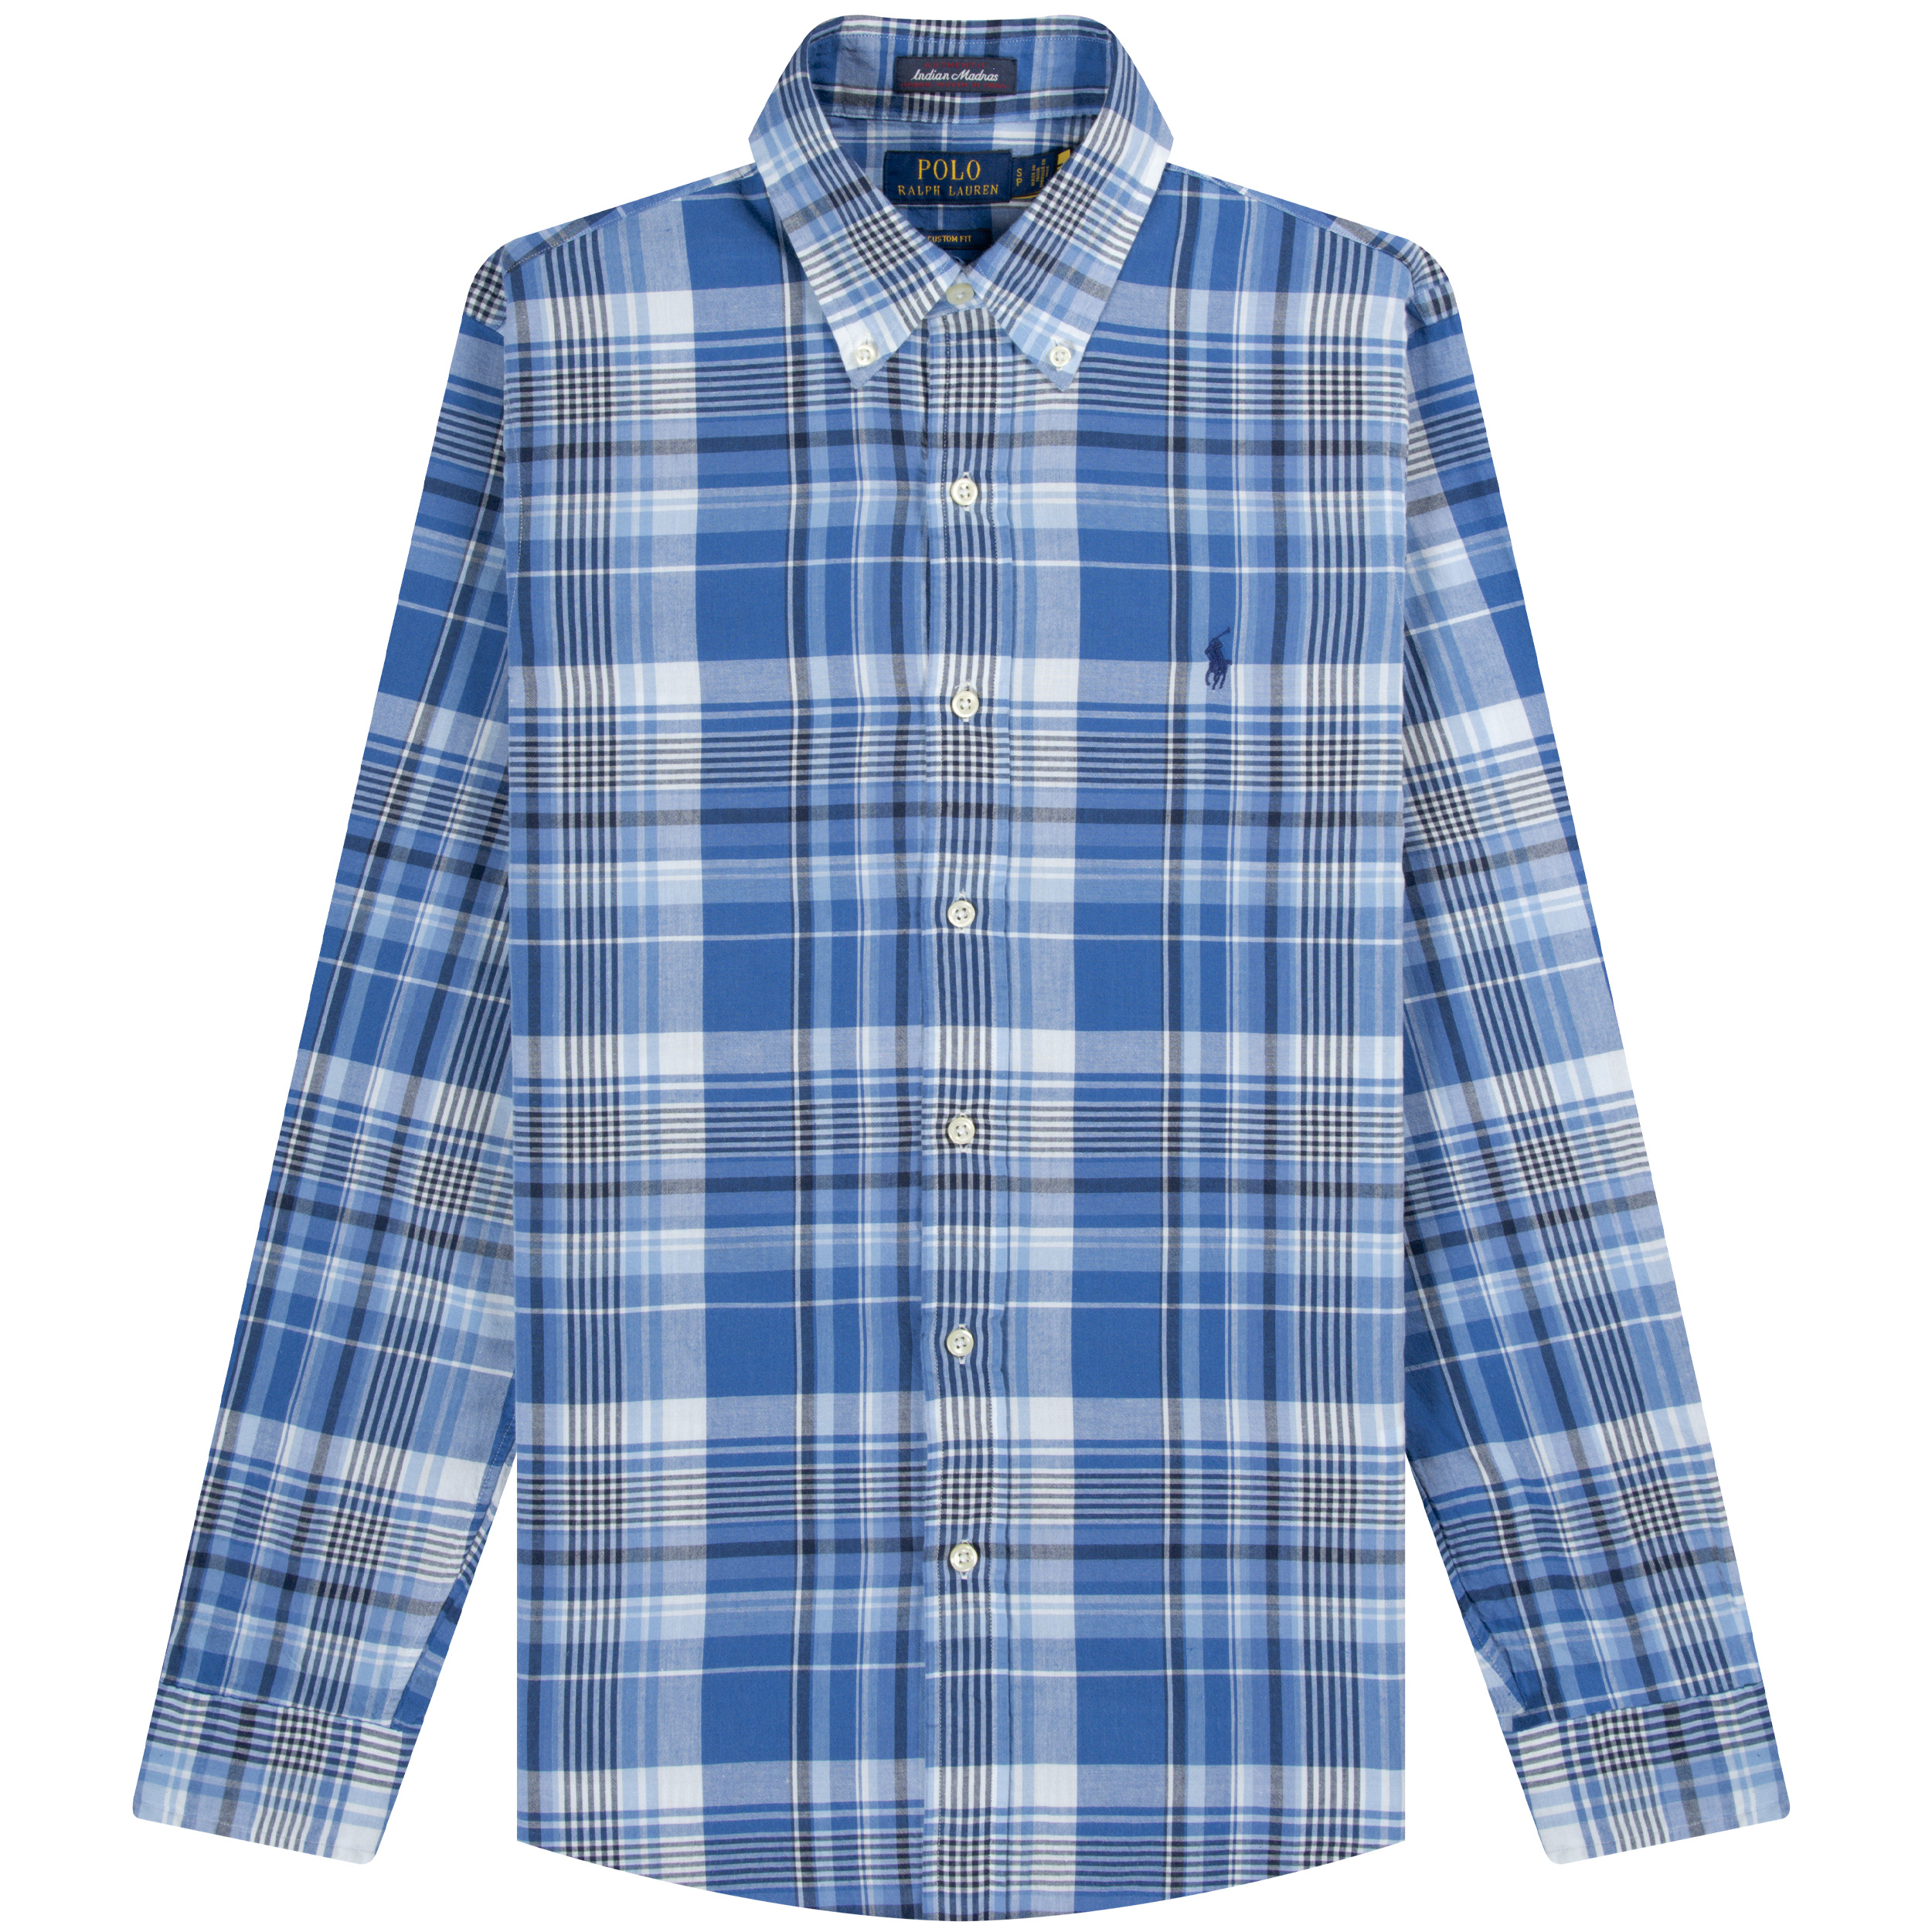 Polo Ralph Lauren ’Check’ LS Shirt Blue/White